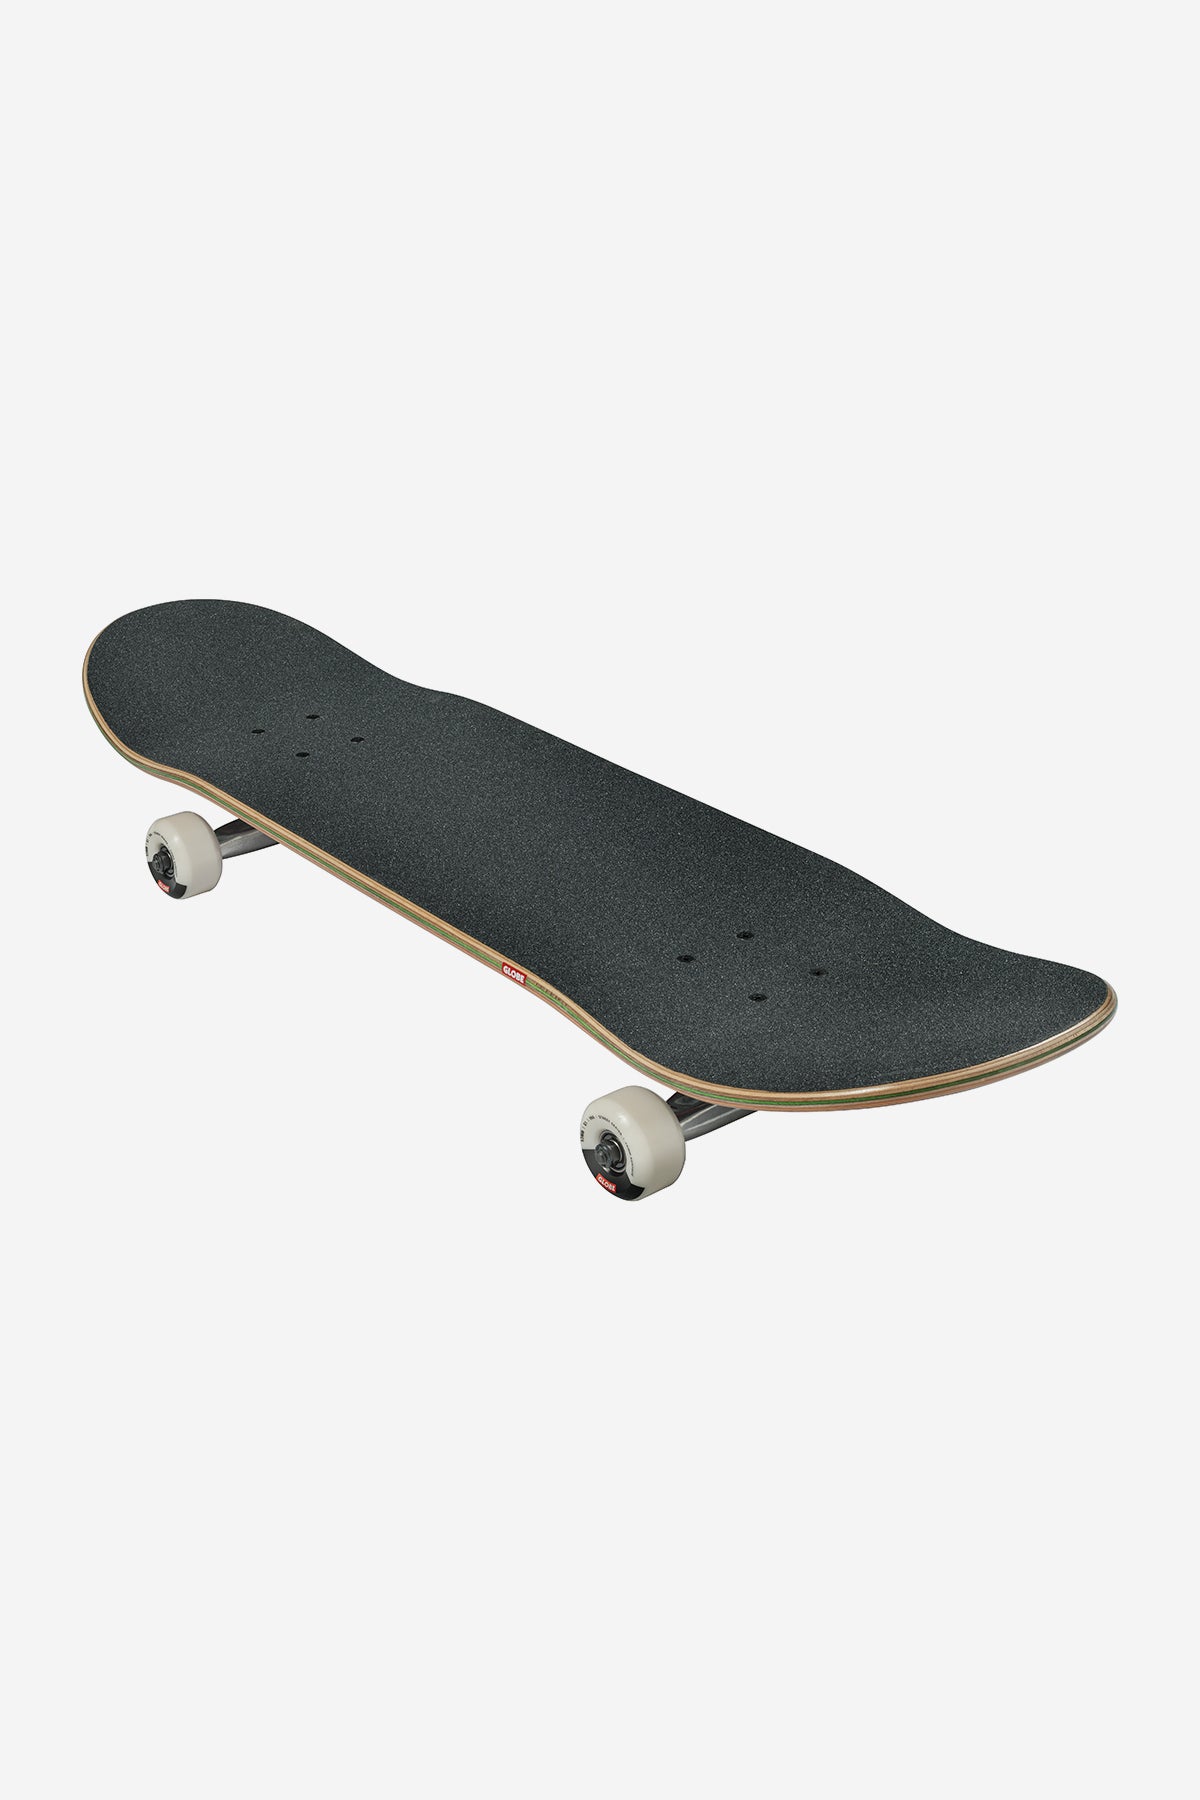 Globe - G1 Stack - Daydream - 8.25" Completo Skateboard